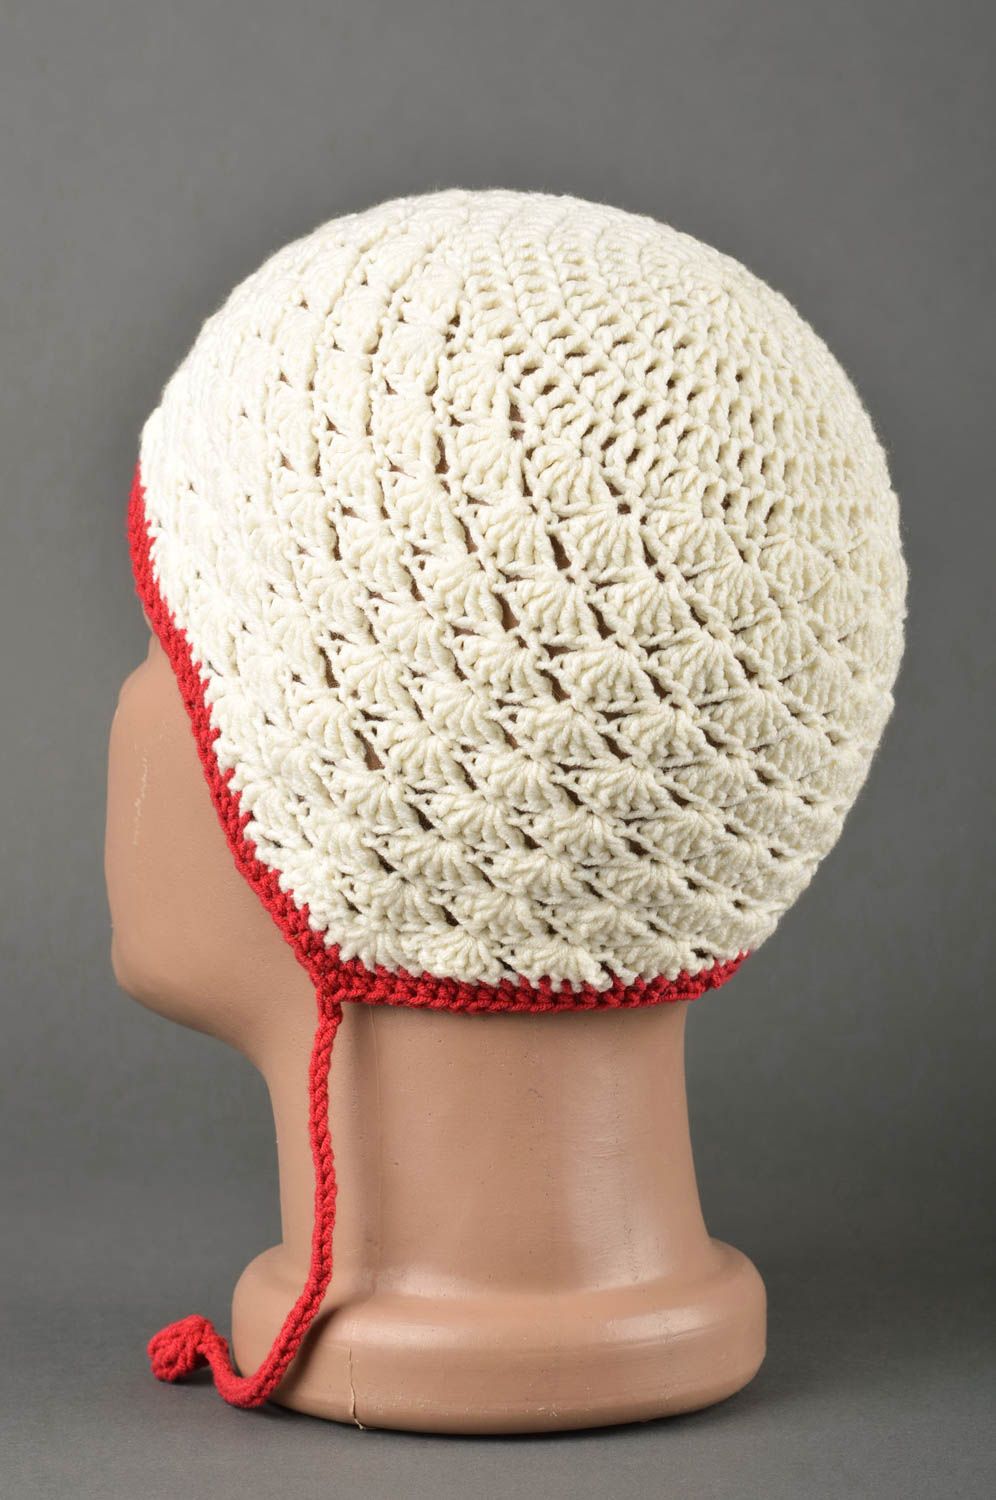 Beautiful hadmade crochet hat baby hat designs crochet ideas gifts for kids photo 4